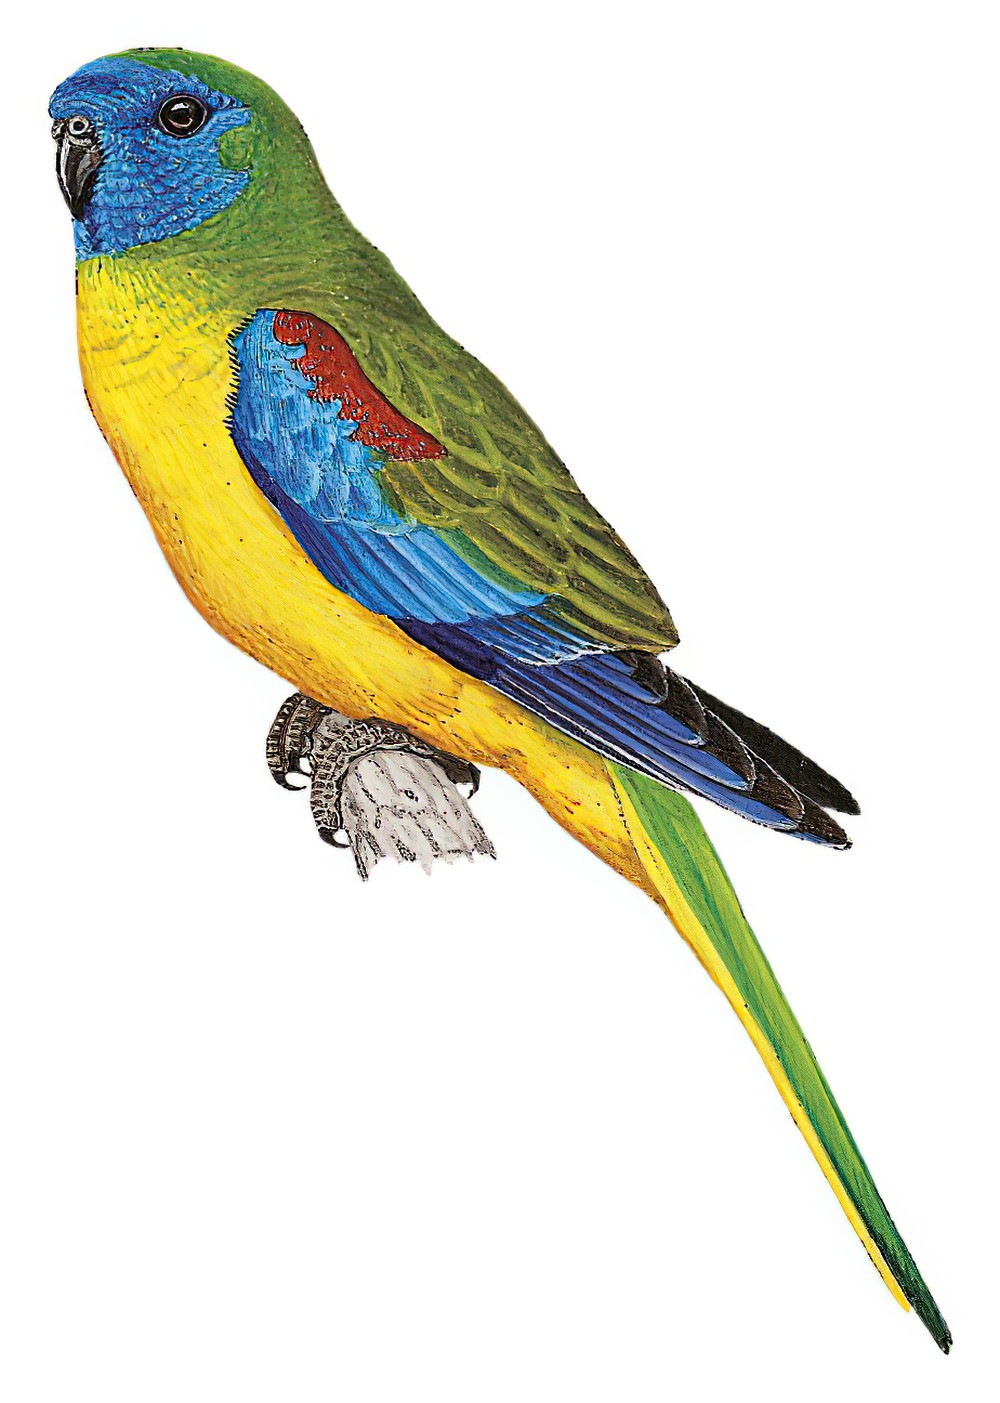 Turquoise Parrot / Neophema pulchella